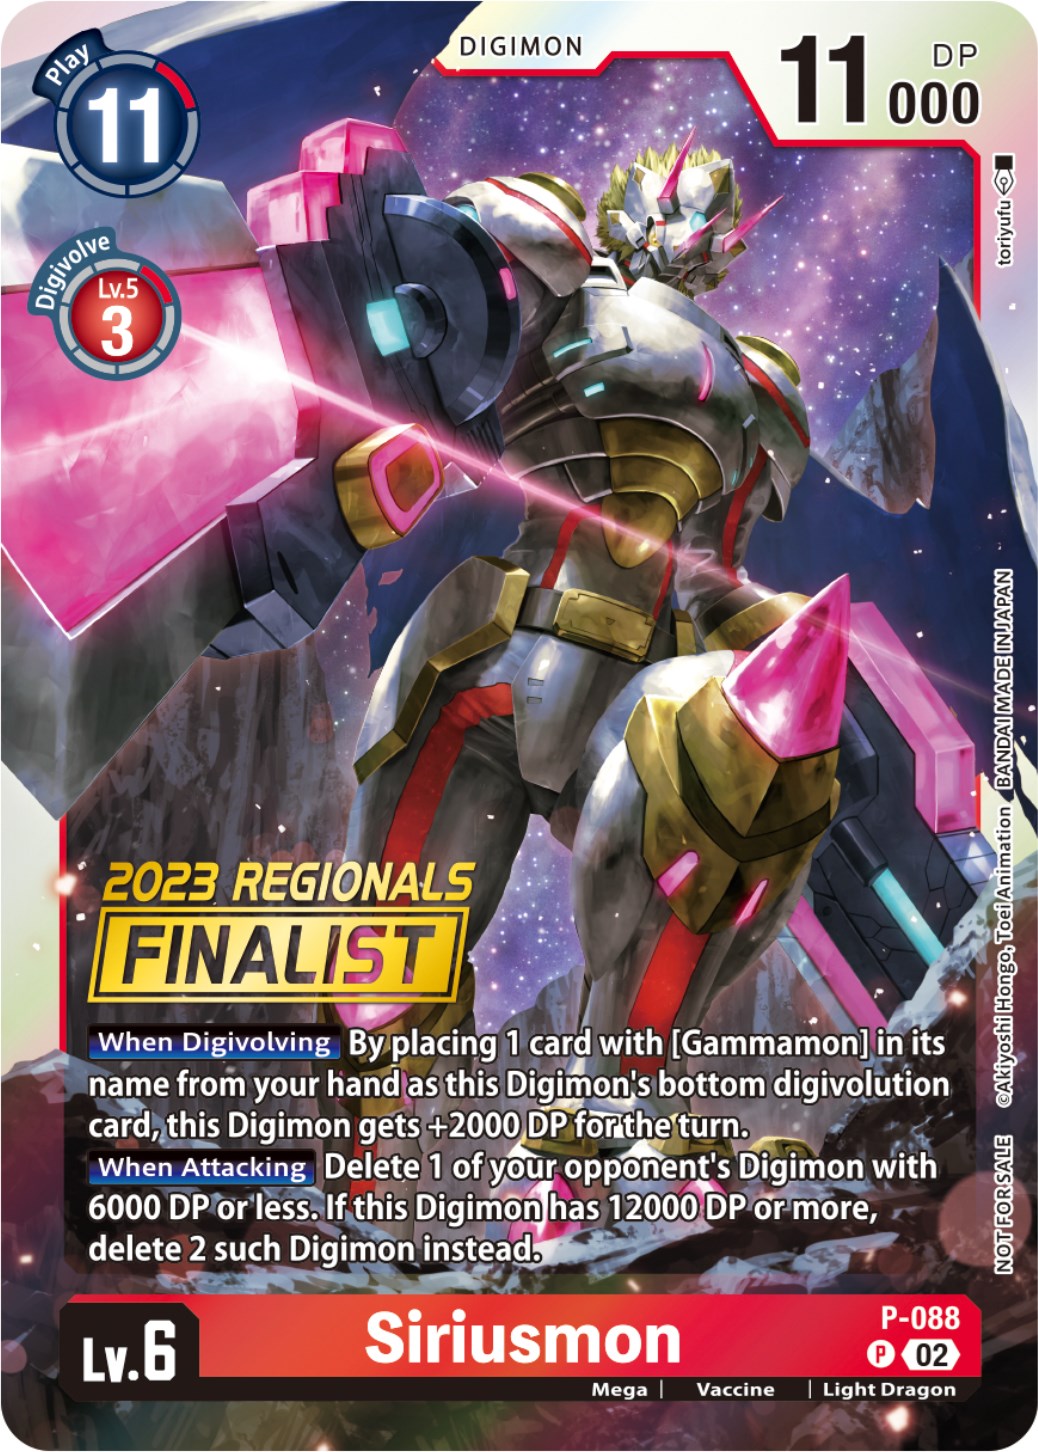 Siriusmon [P-088] (2023 Regionals Finalist) [Promotional Cards] | The Time Vault CA